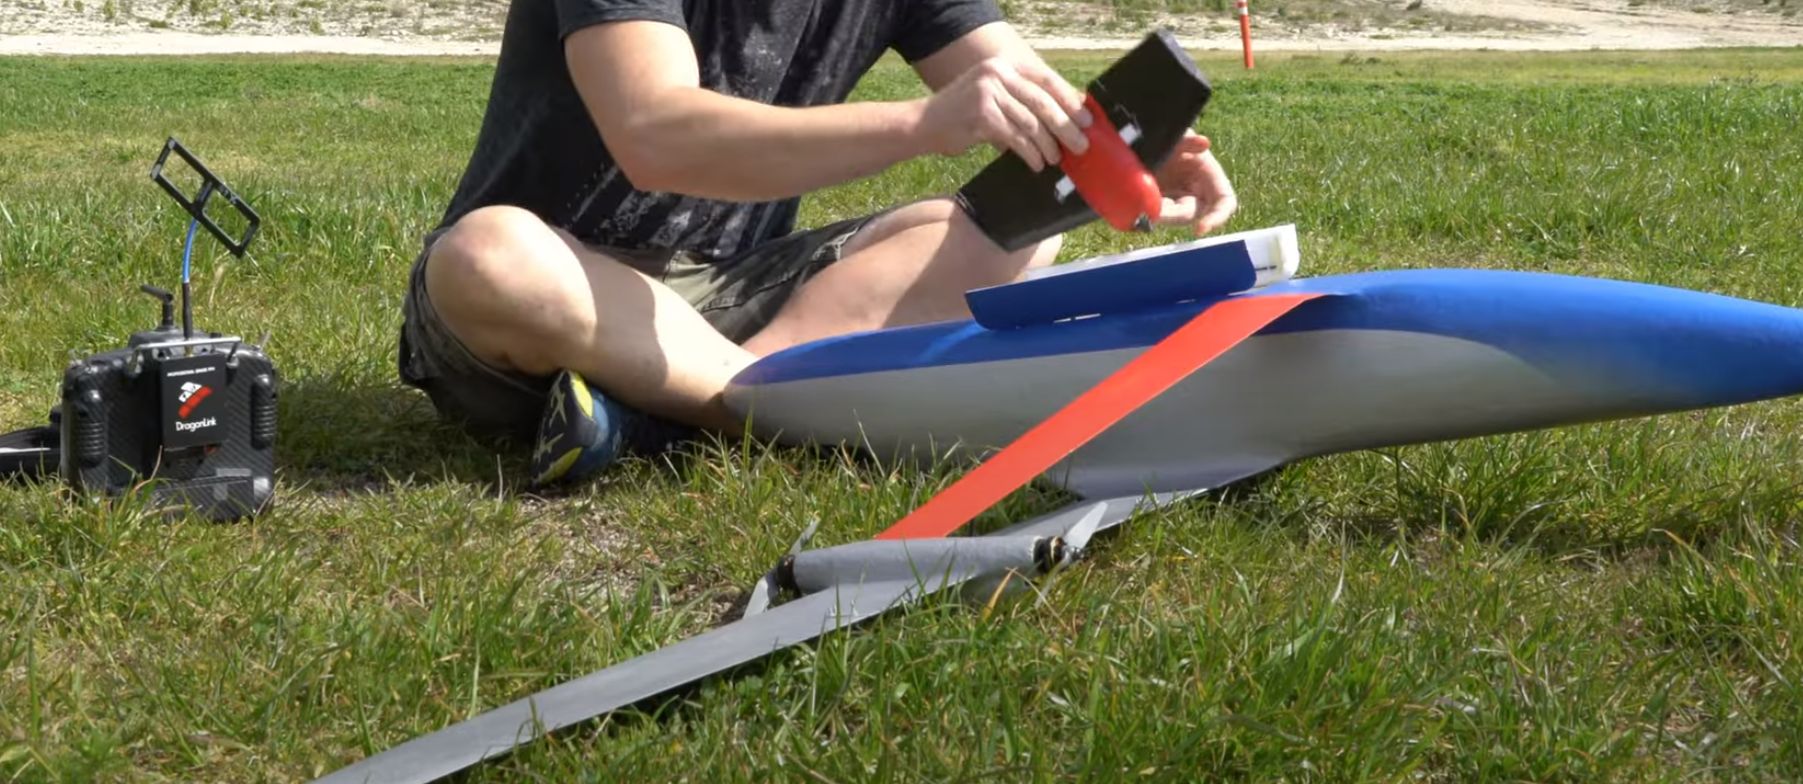 Flugzeugmodellbau mit Getriebestrebe: Sinn oder Unsinn?